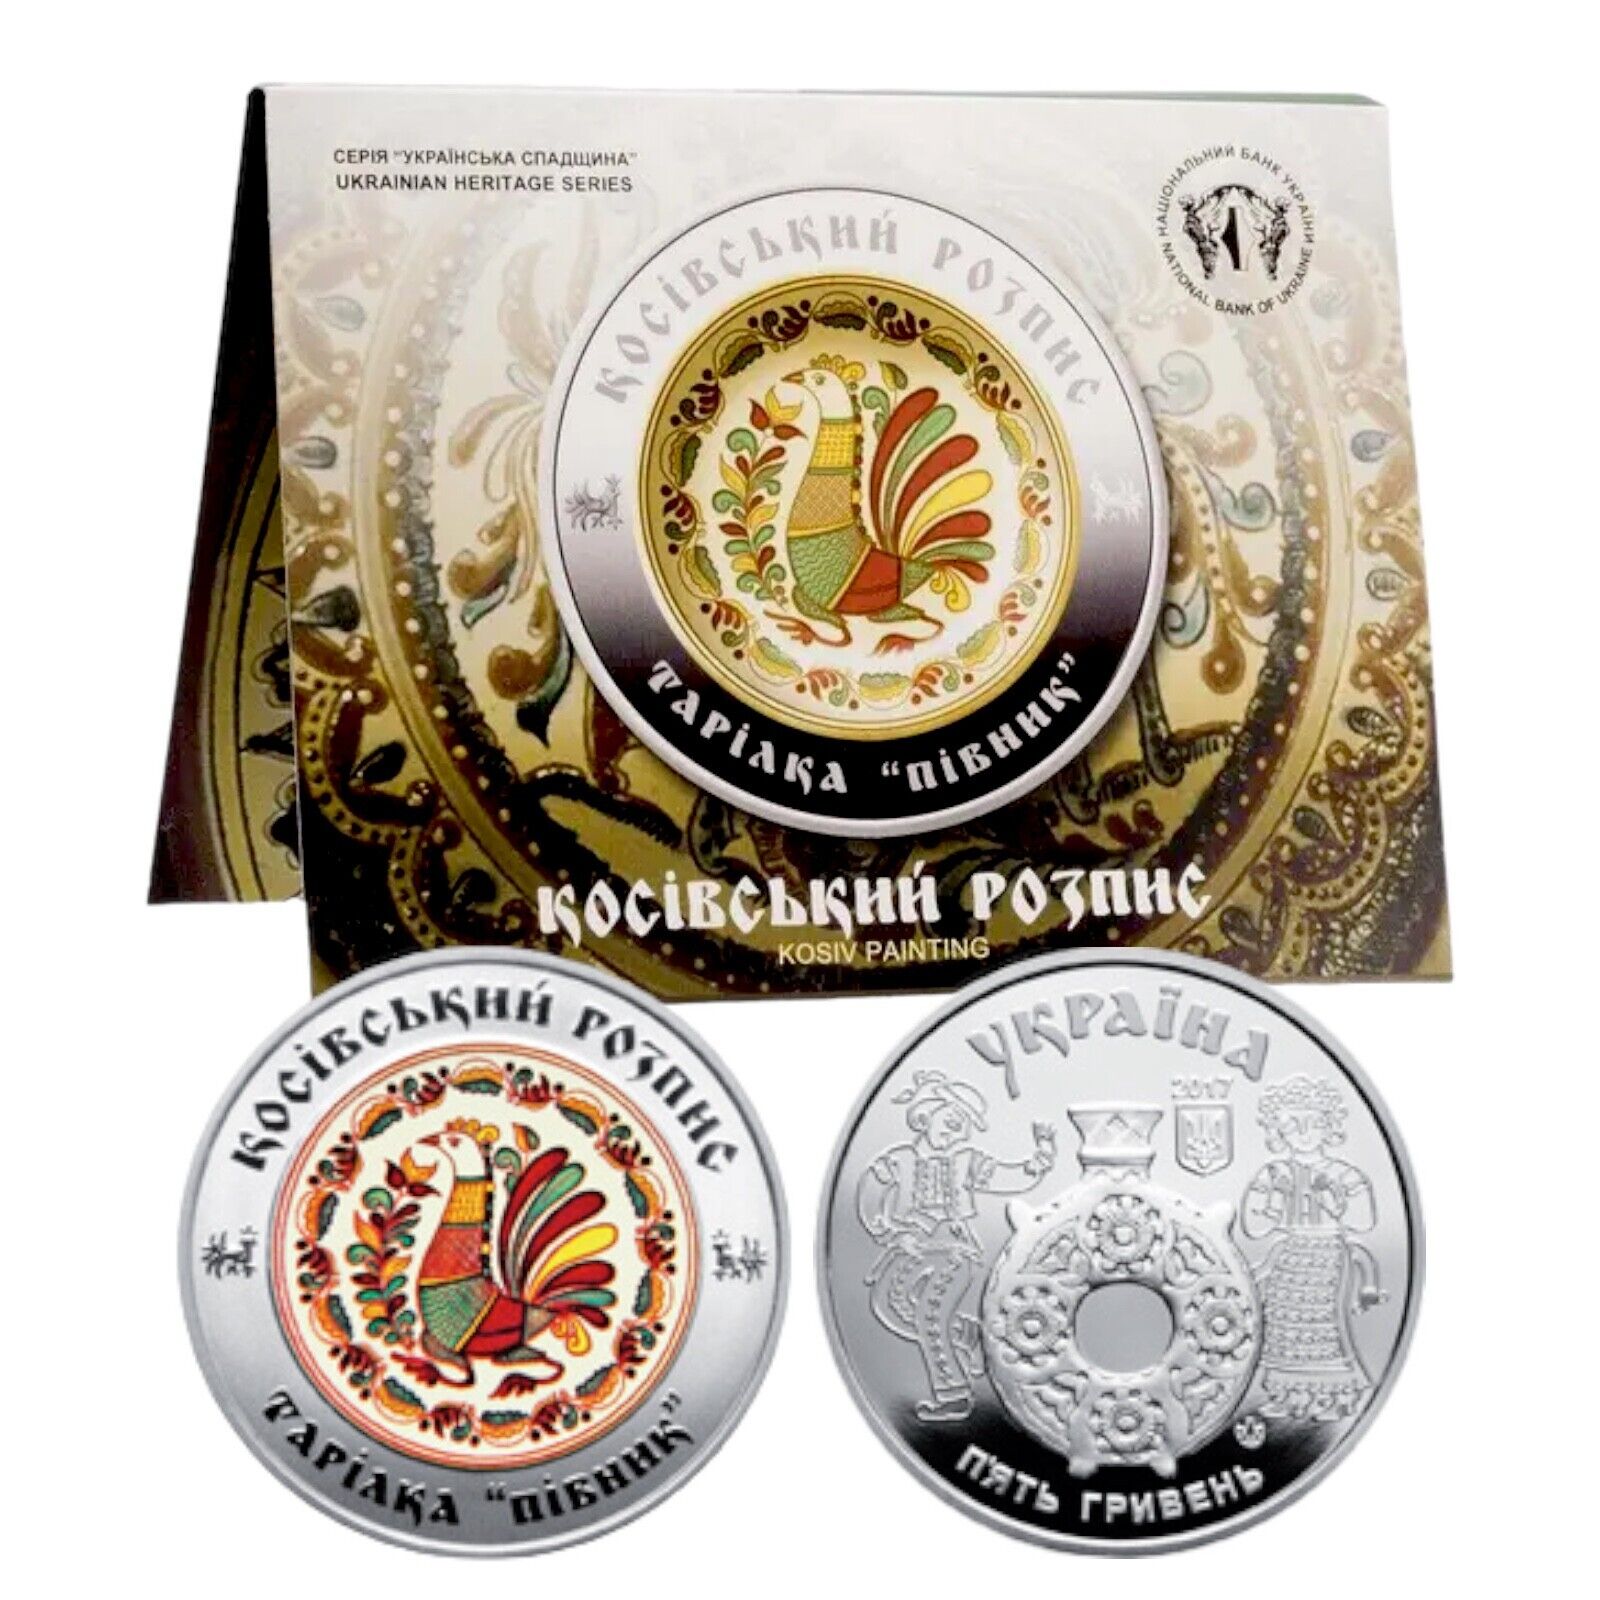 Ukrainian Souvenir Coin “Kosiv Painting” Support for Ukraine